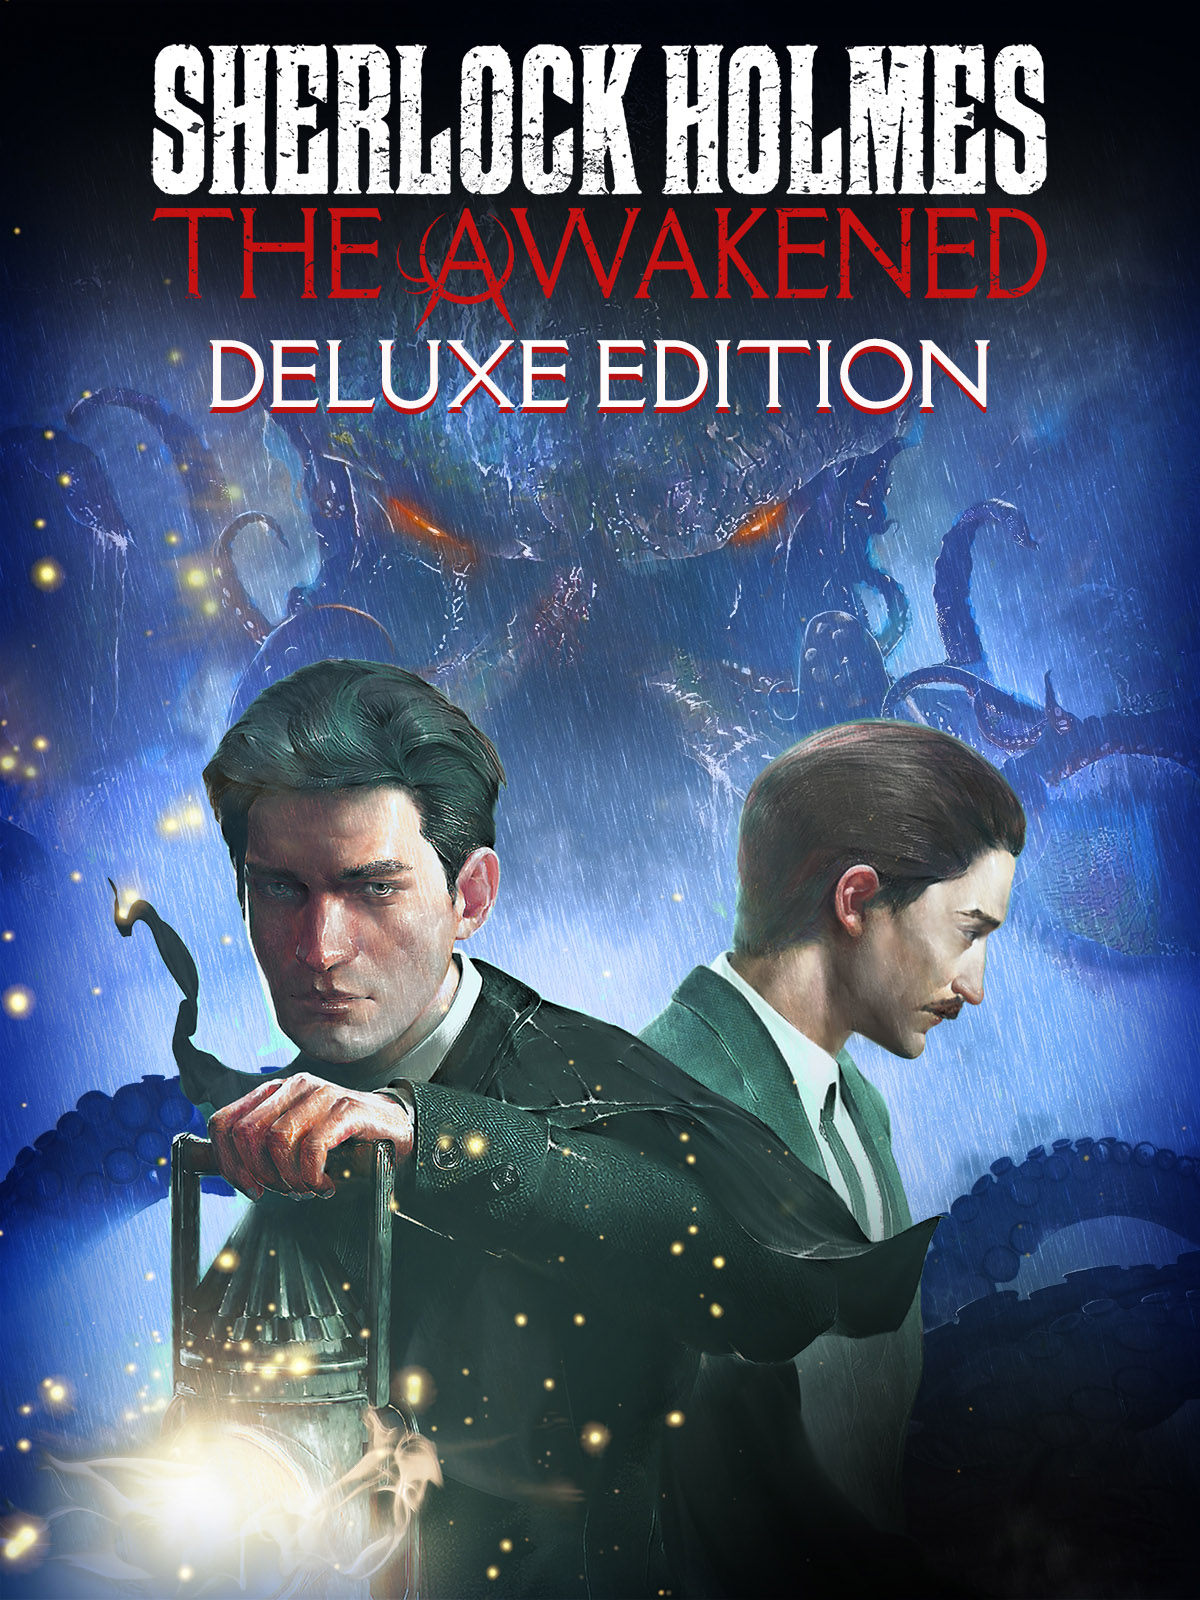 Sherlock Holmes The Awakened Deluxe Edition